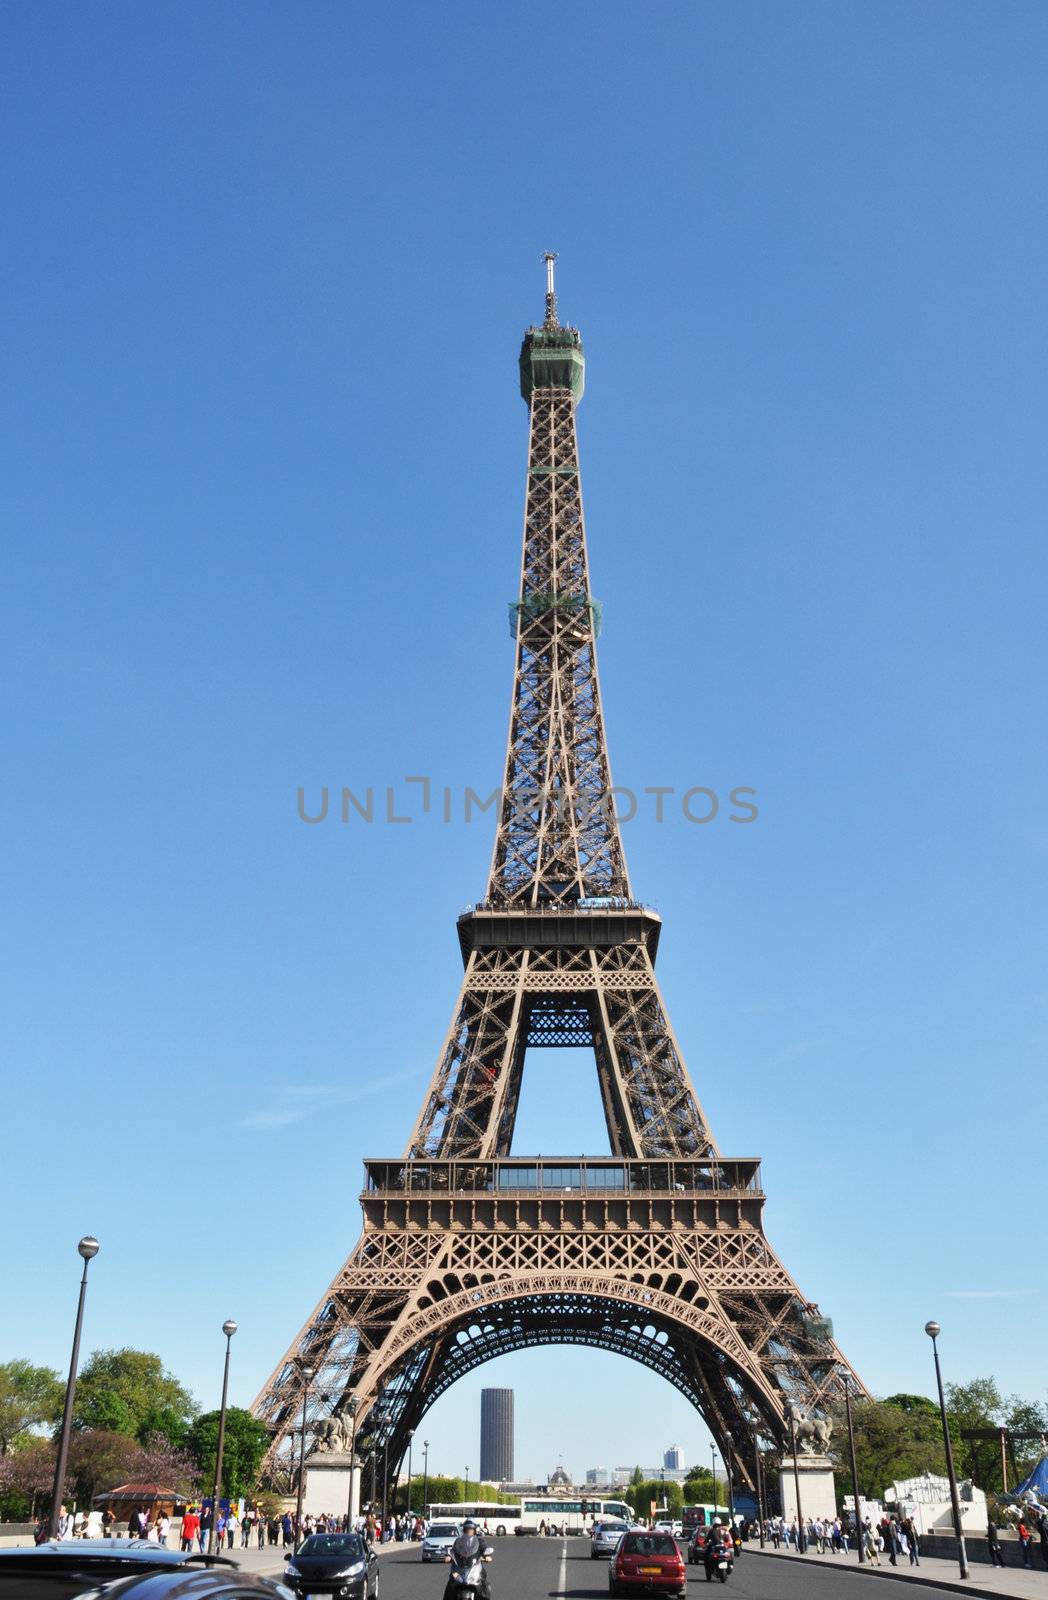 The Eiffel Tower by dutourdumonde